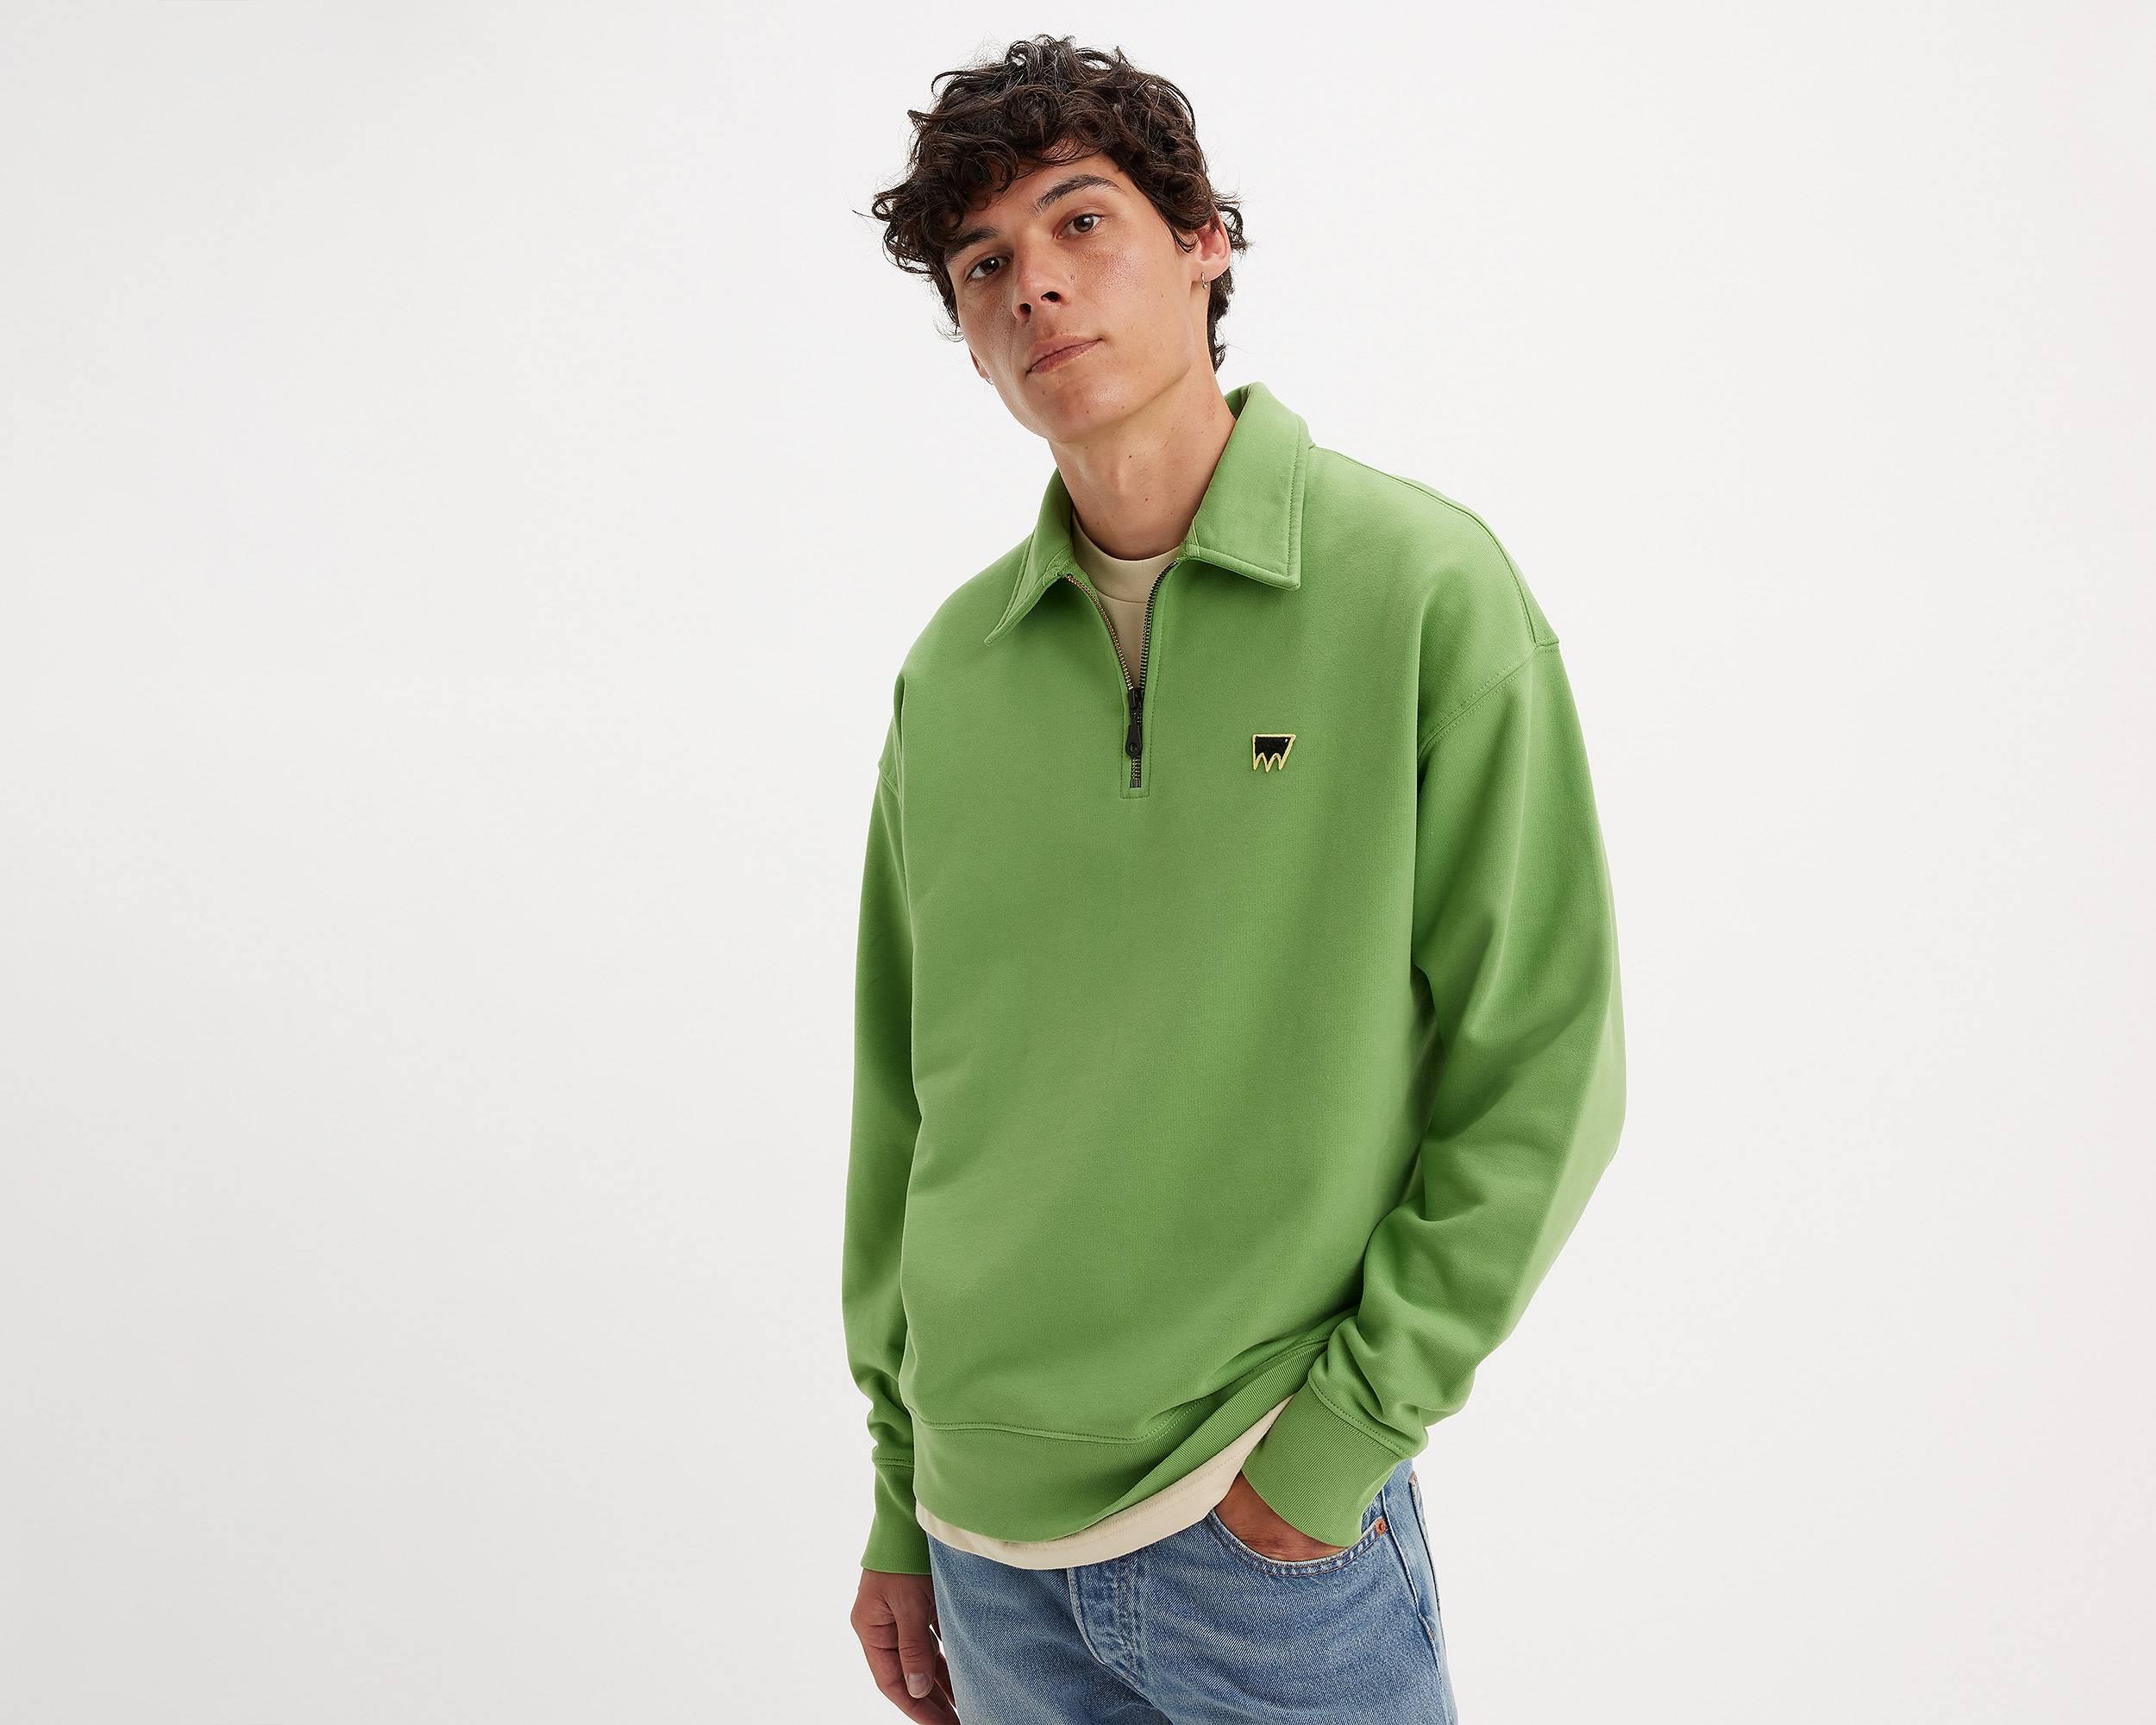 https://levi.pt/content/img/levis_sweatshirt_masculino_levis-skate-quarter-zip-sweatshirt-a1012-0007_jade-green_1.jpg